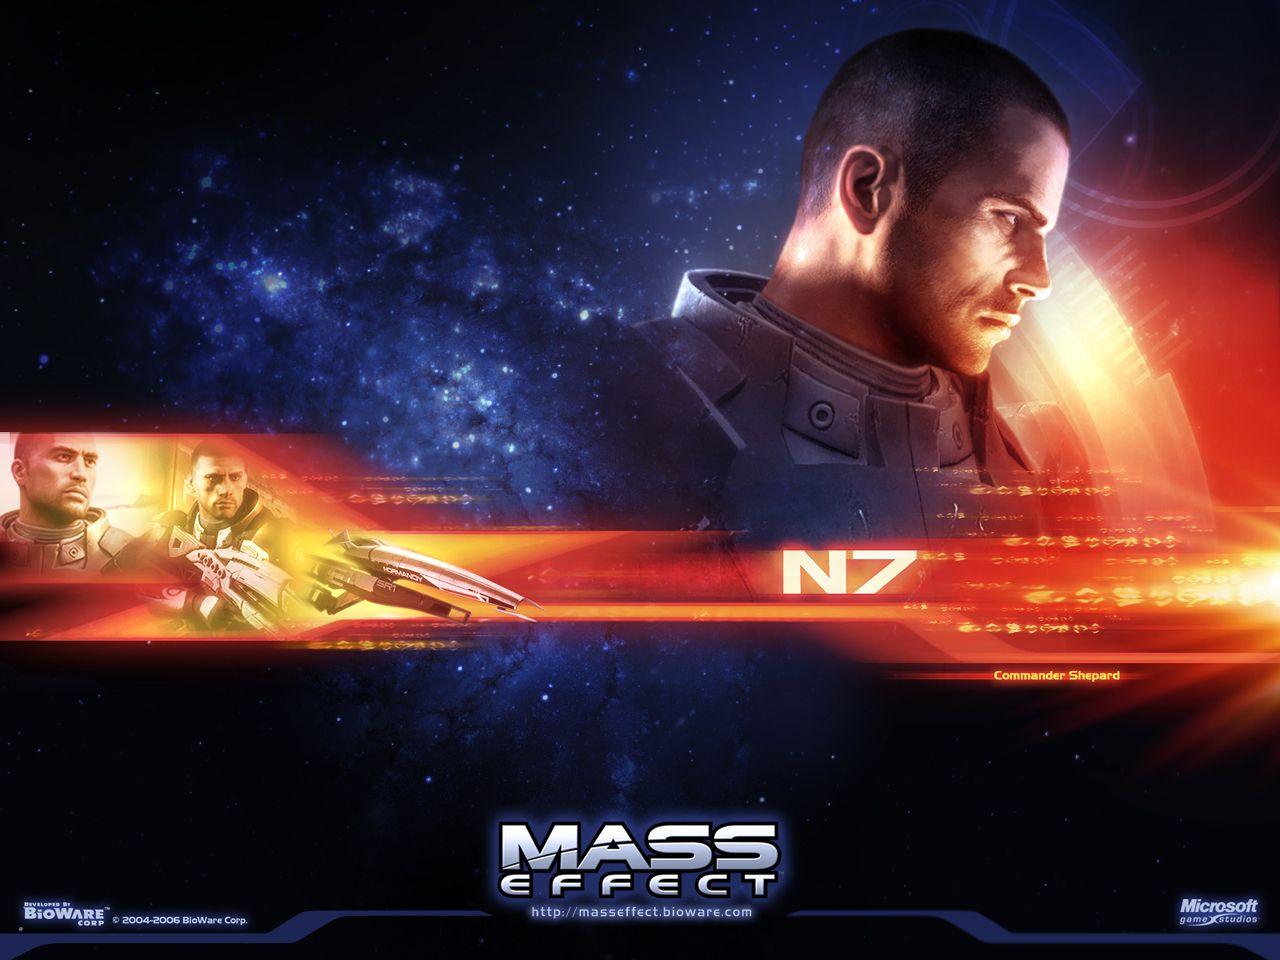 Mass Effect image Wallpaper (Shepard) HD wallpaper and background